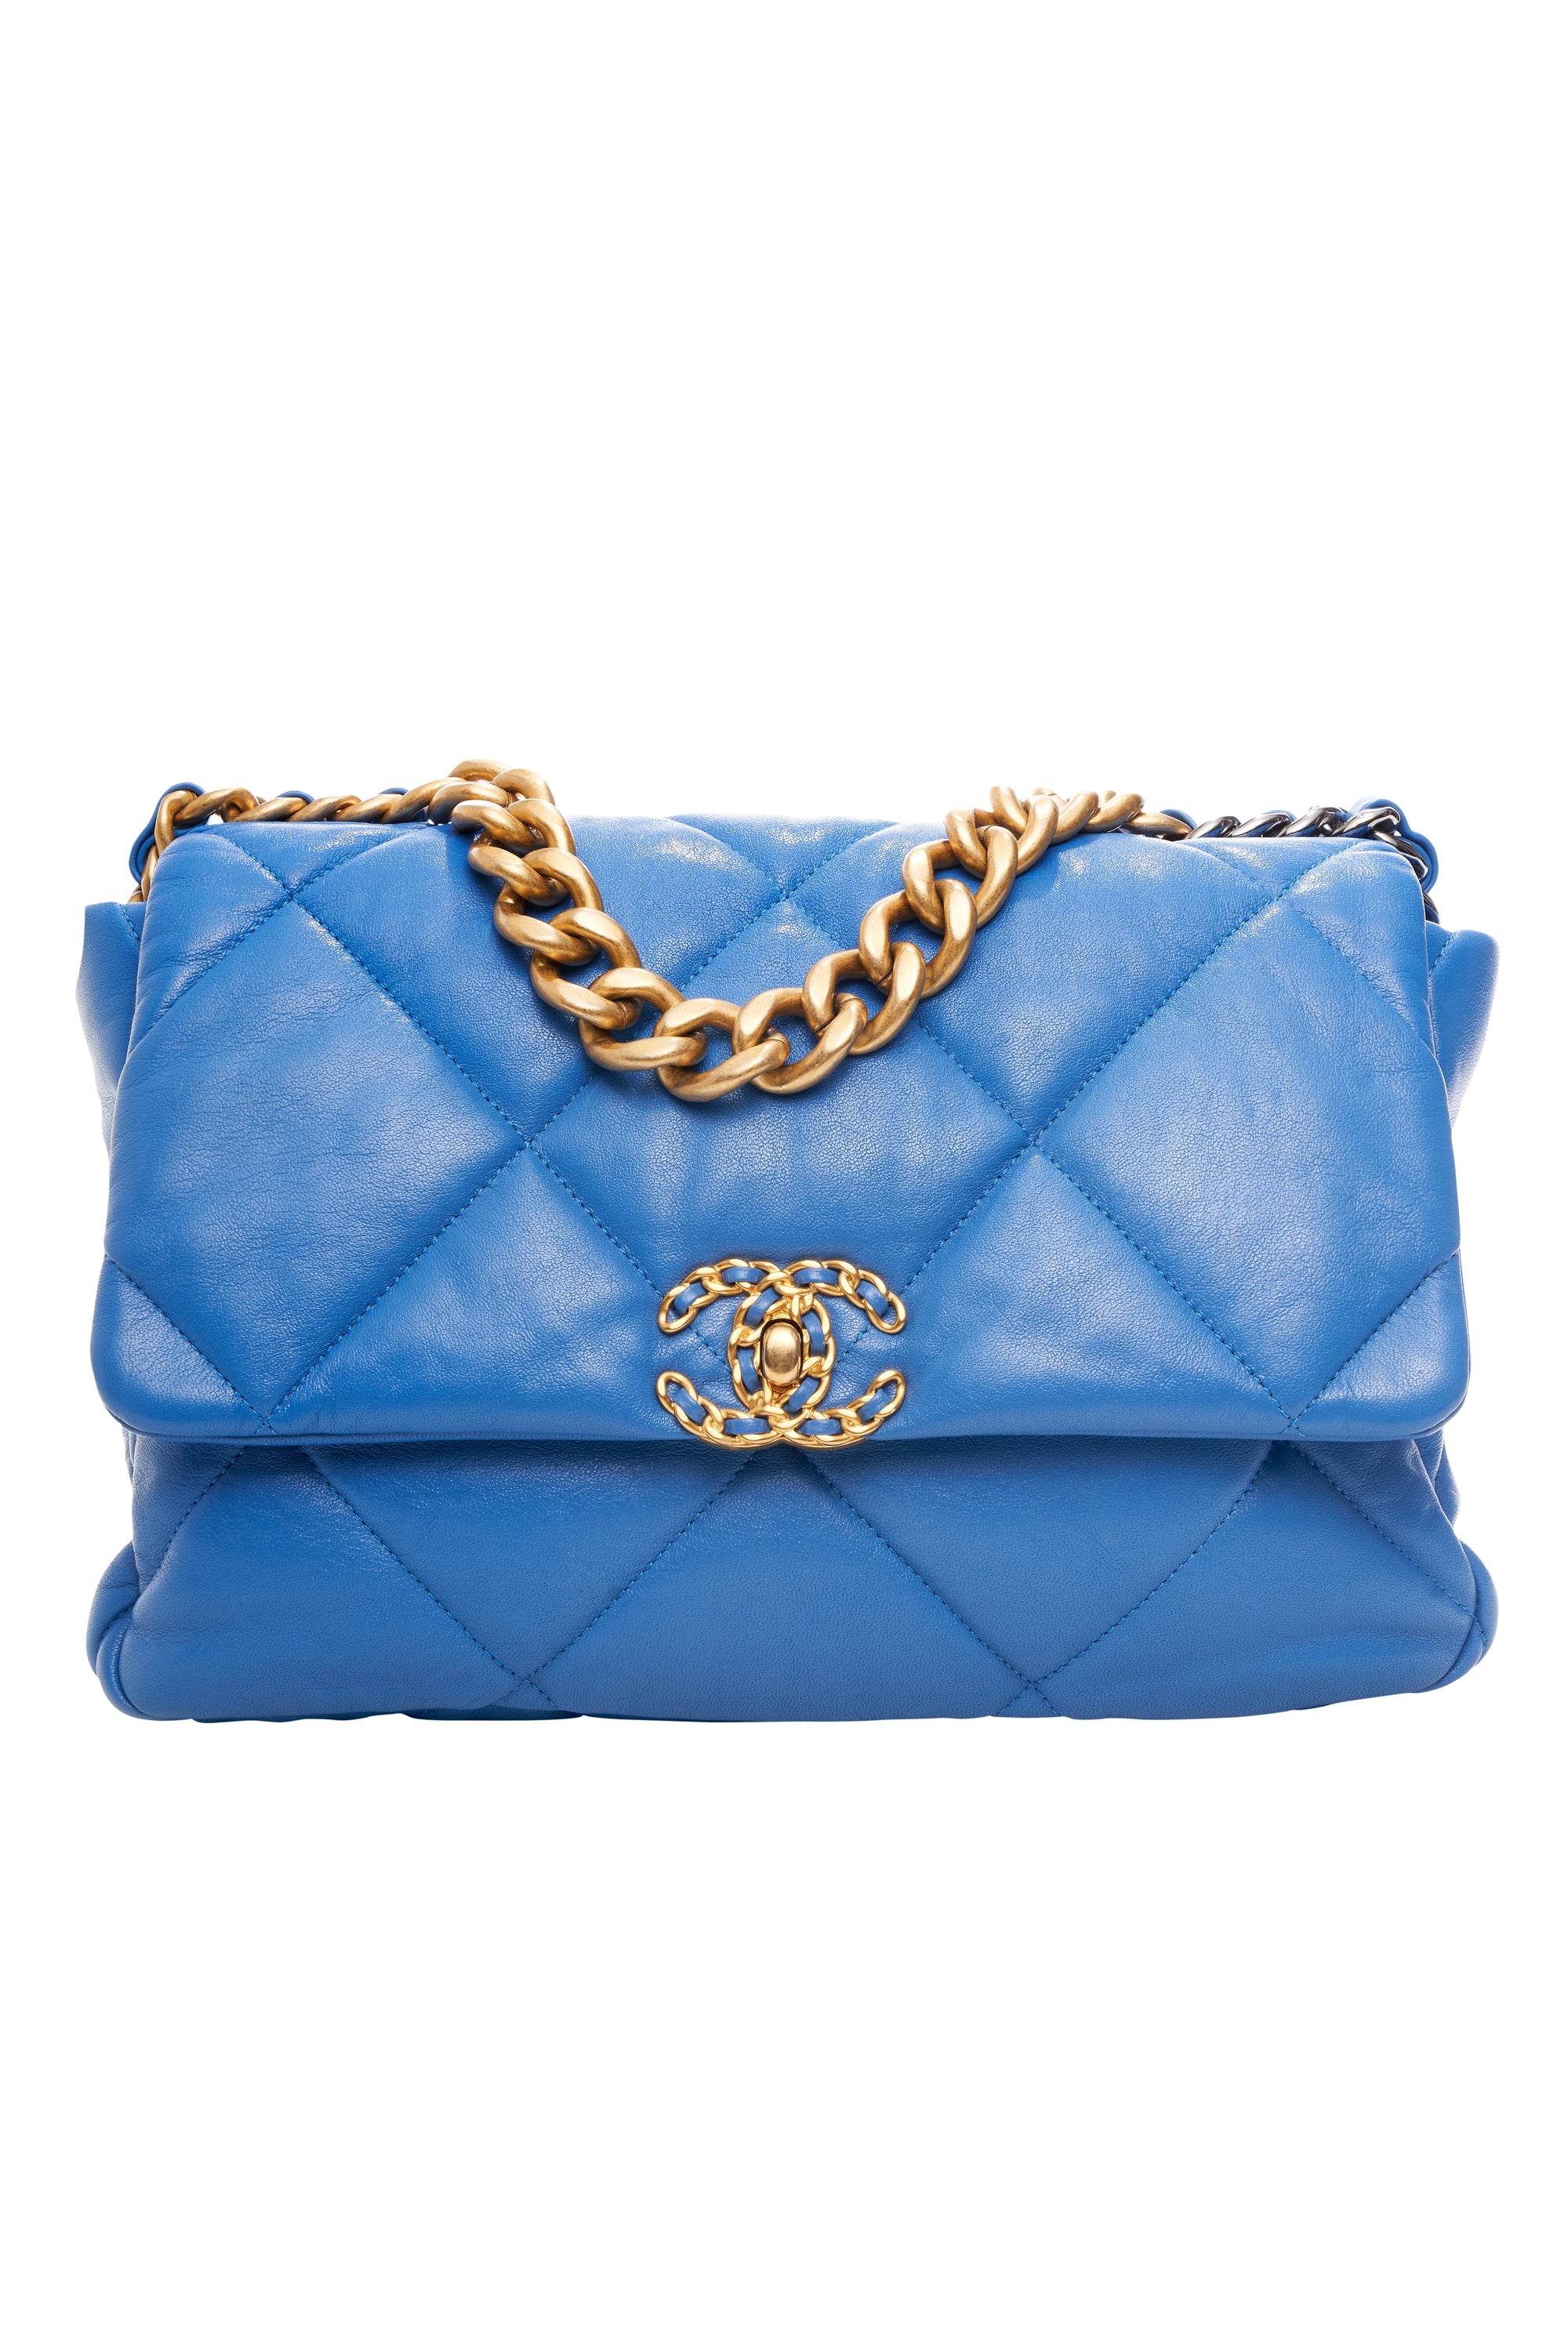 Chanel 19 Medium Blue Purse 2020-21 - Foxy Couture Carmel